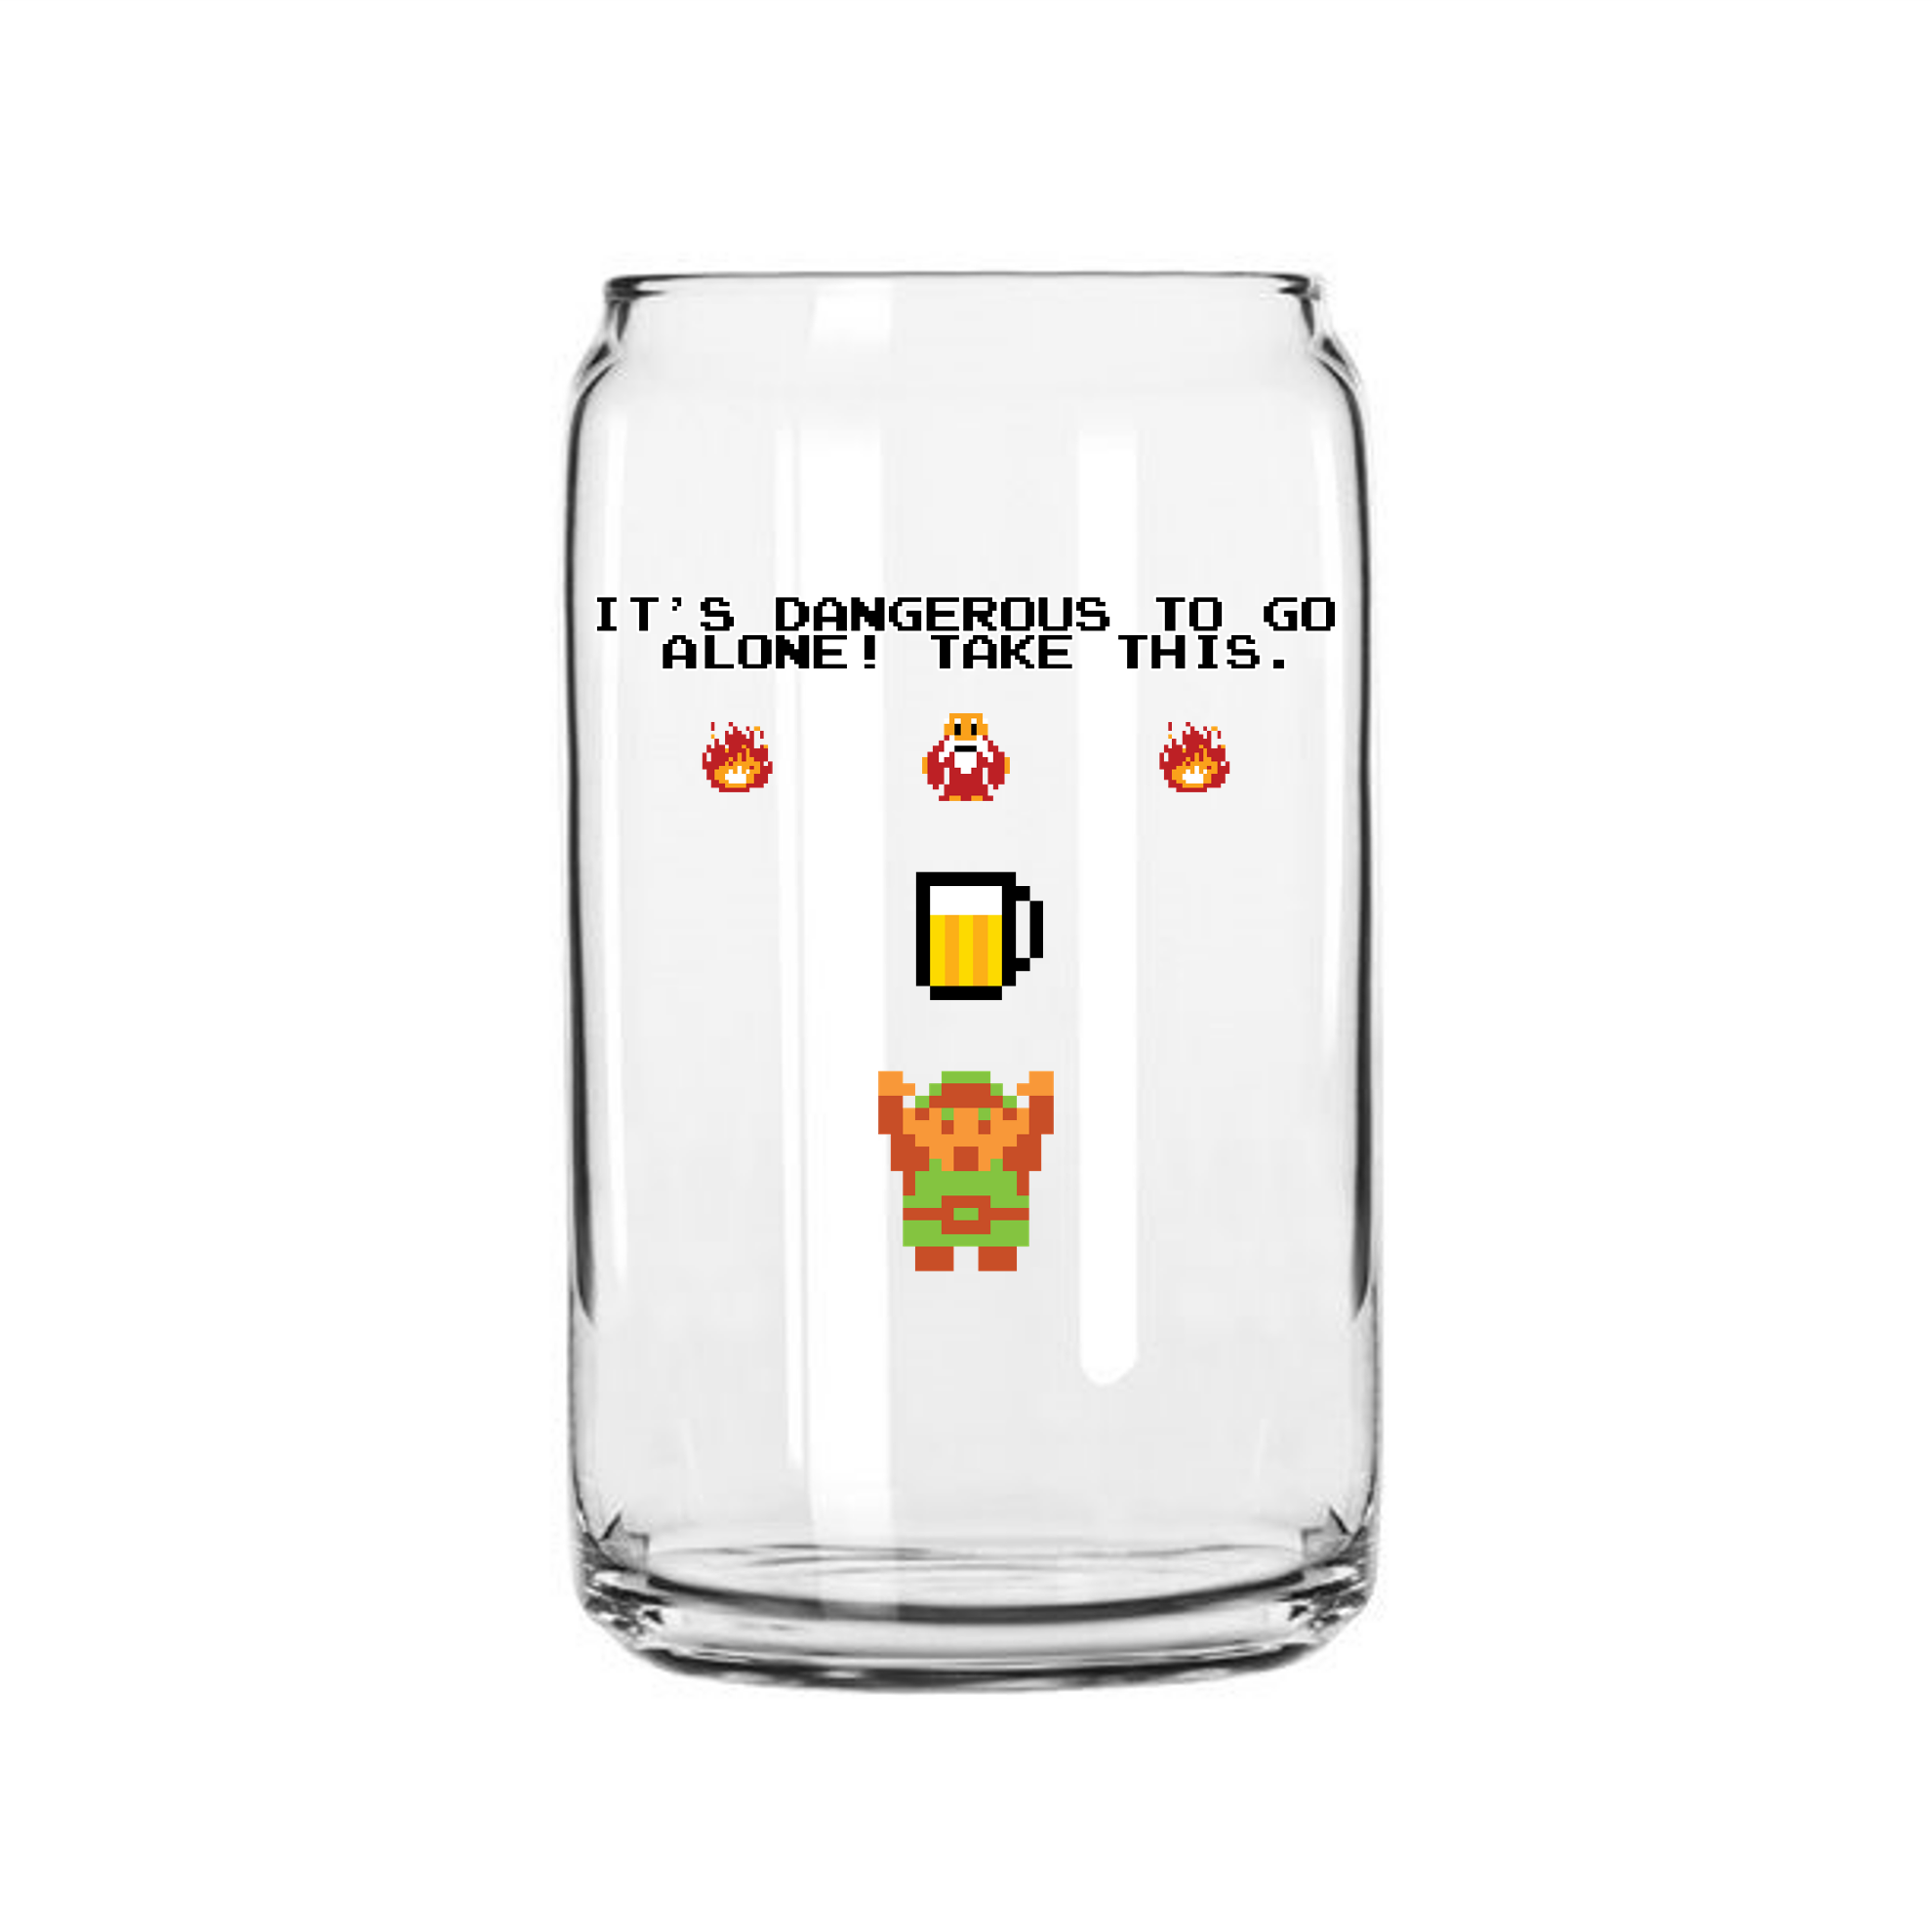 Single Product Image “It's Dangerous To Go Alone” Zelda Link 16oz glass